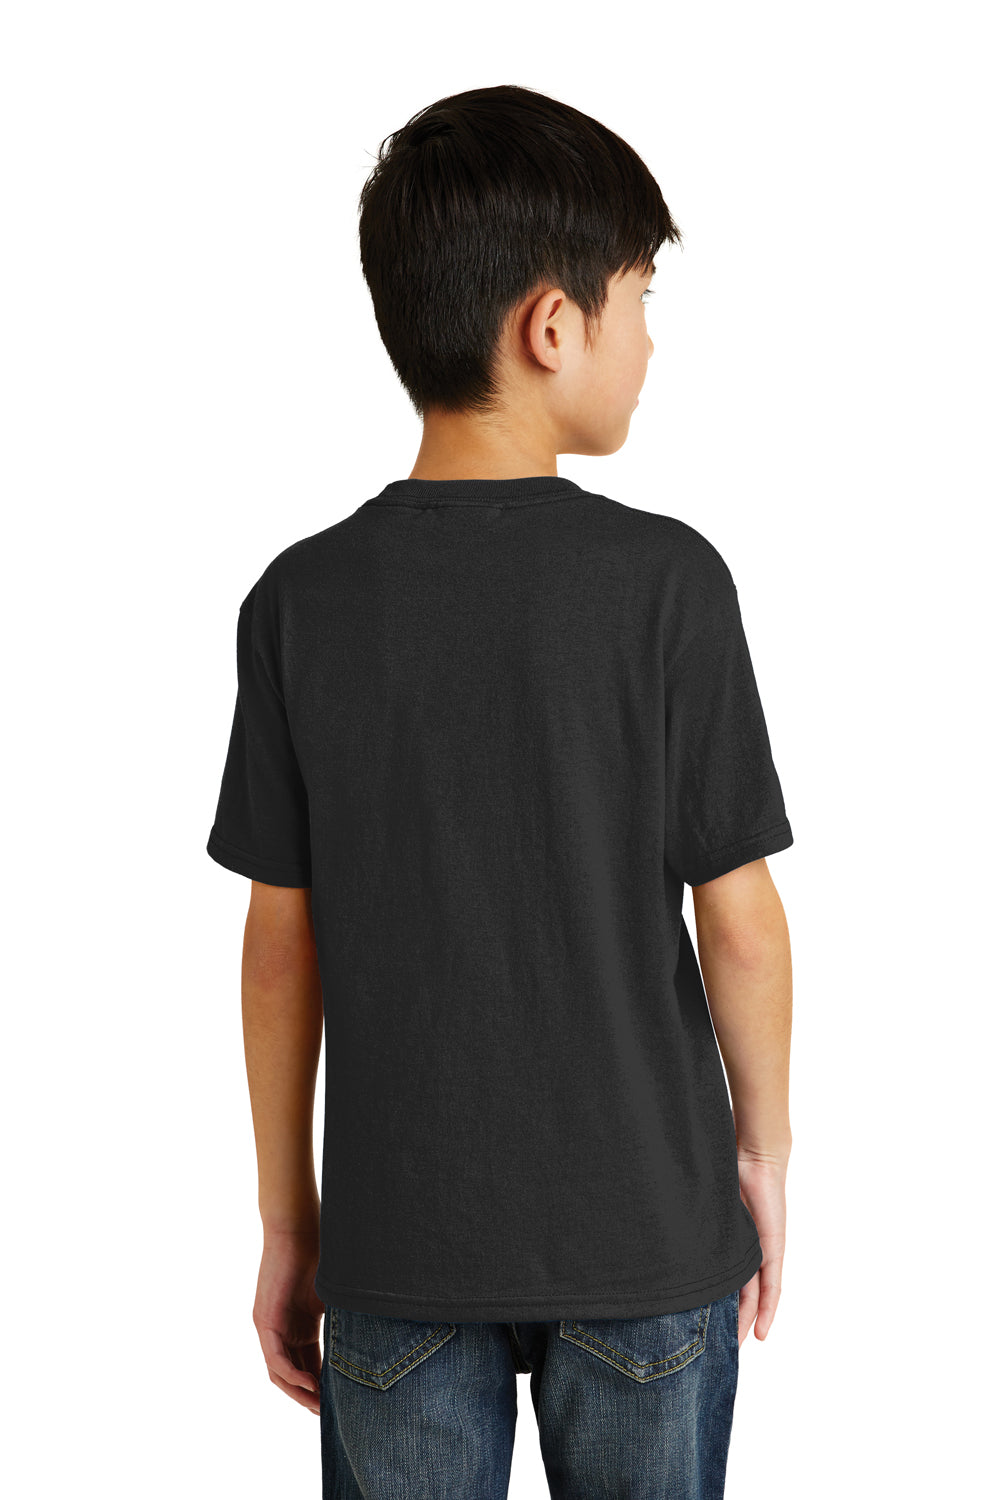 Port & Company PC55Y Youth Core Short Sleeve Crewneck T-Shirt Black Back